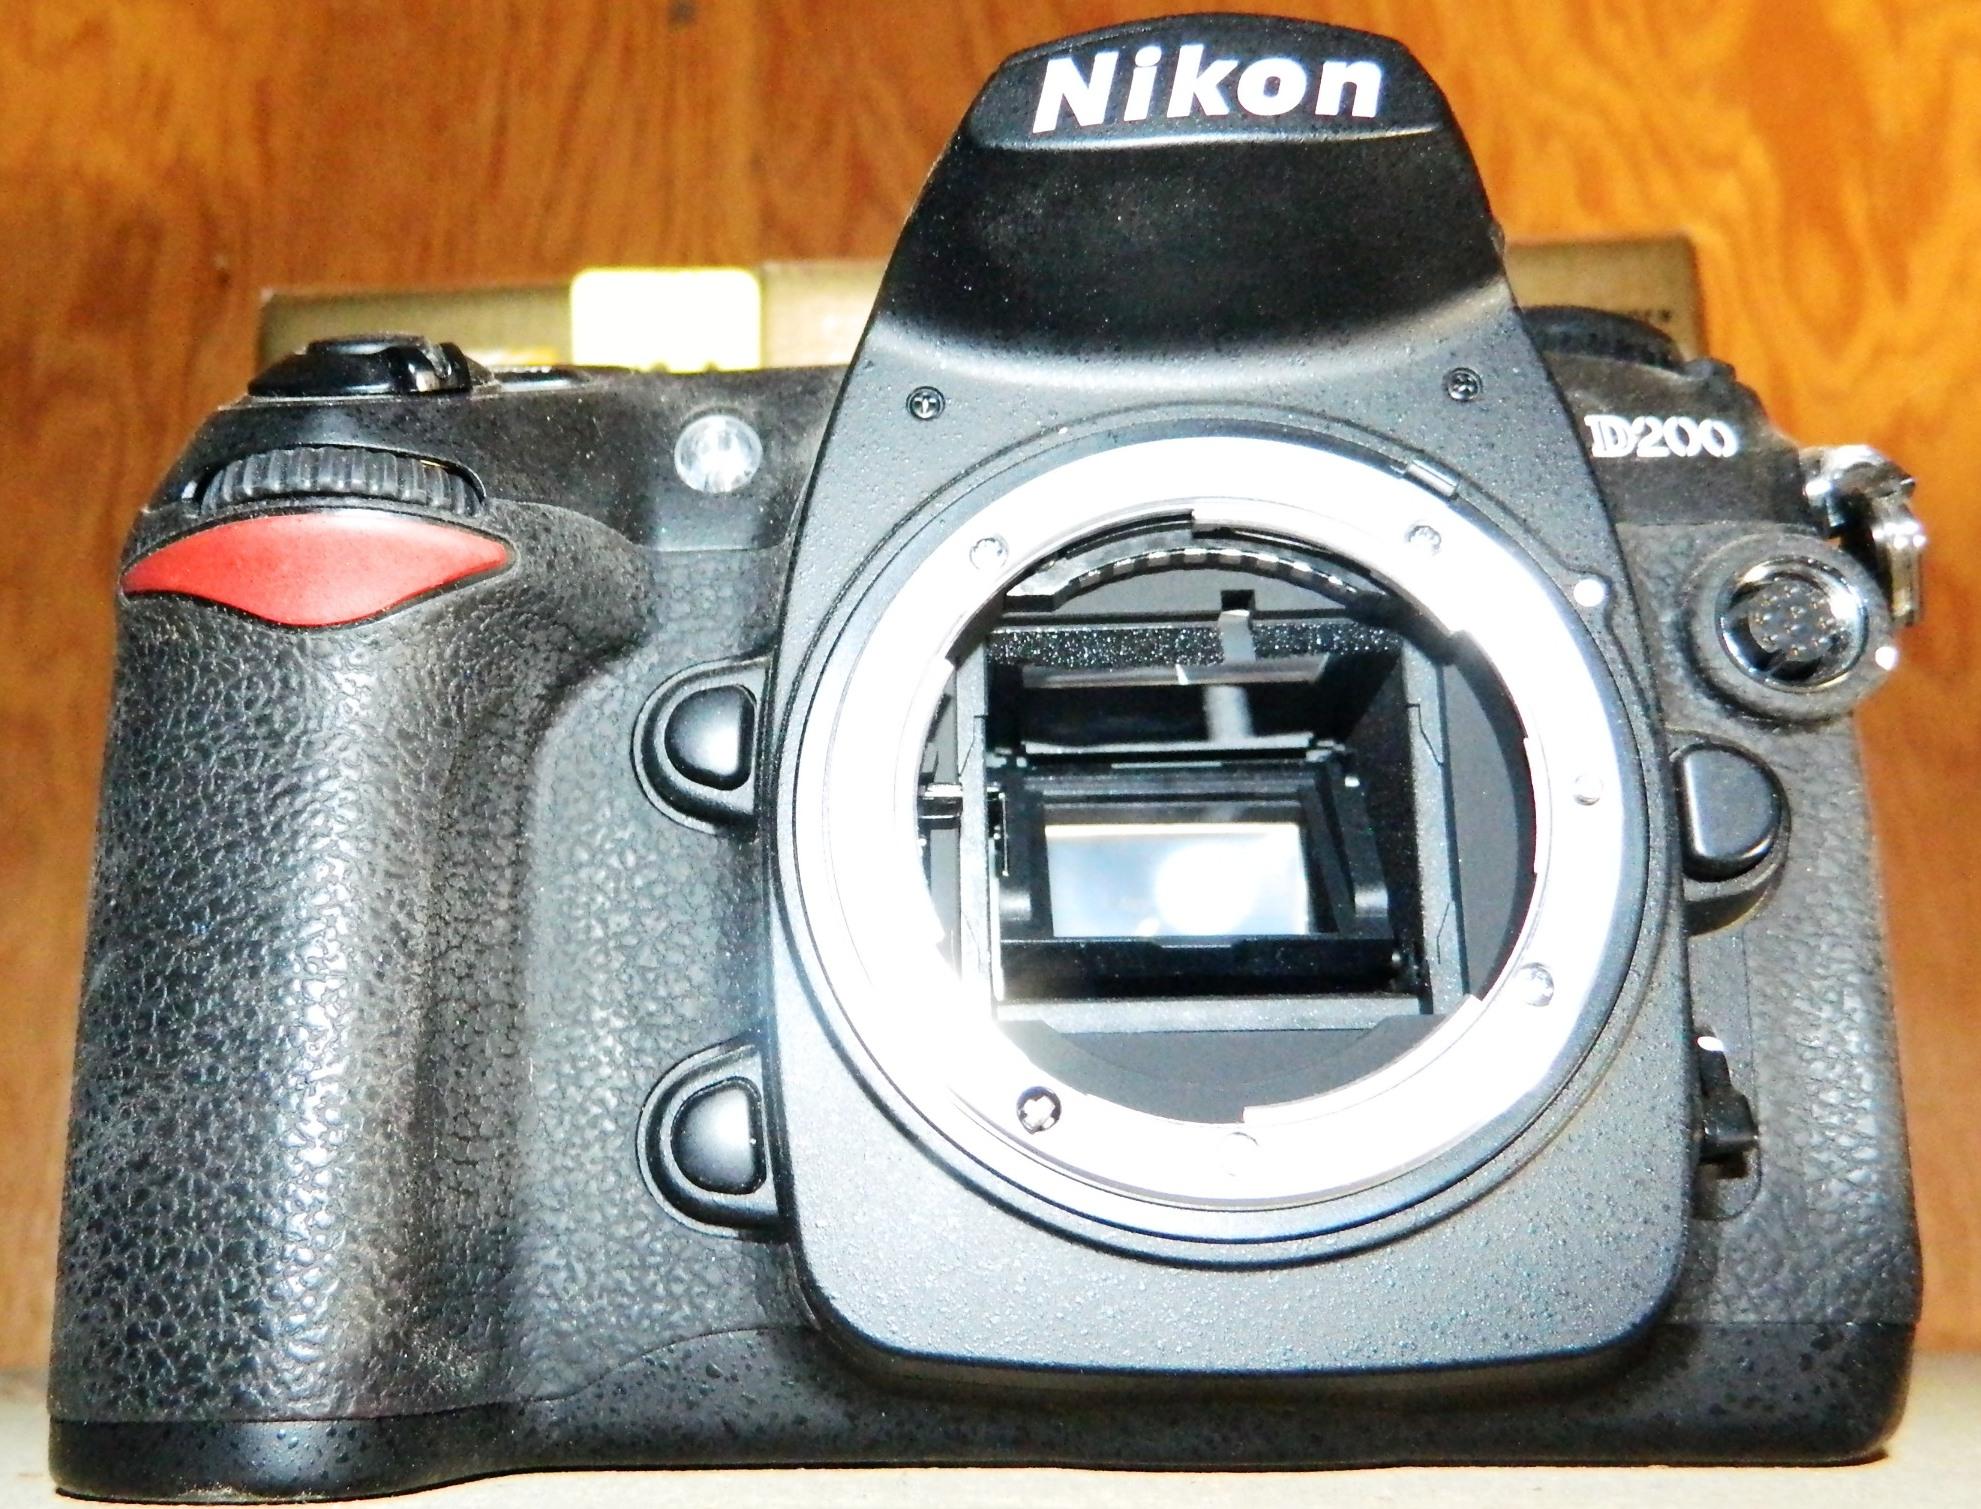 Nikon Digital Cameras